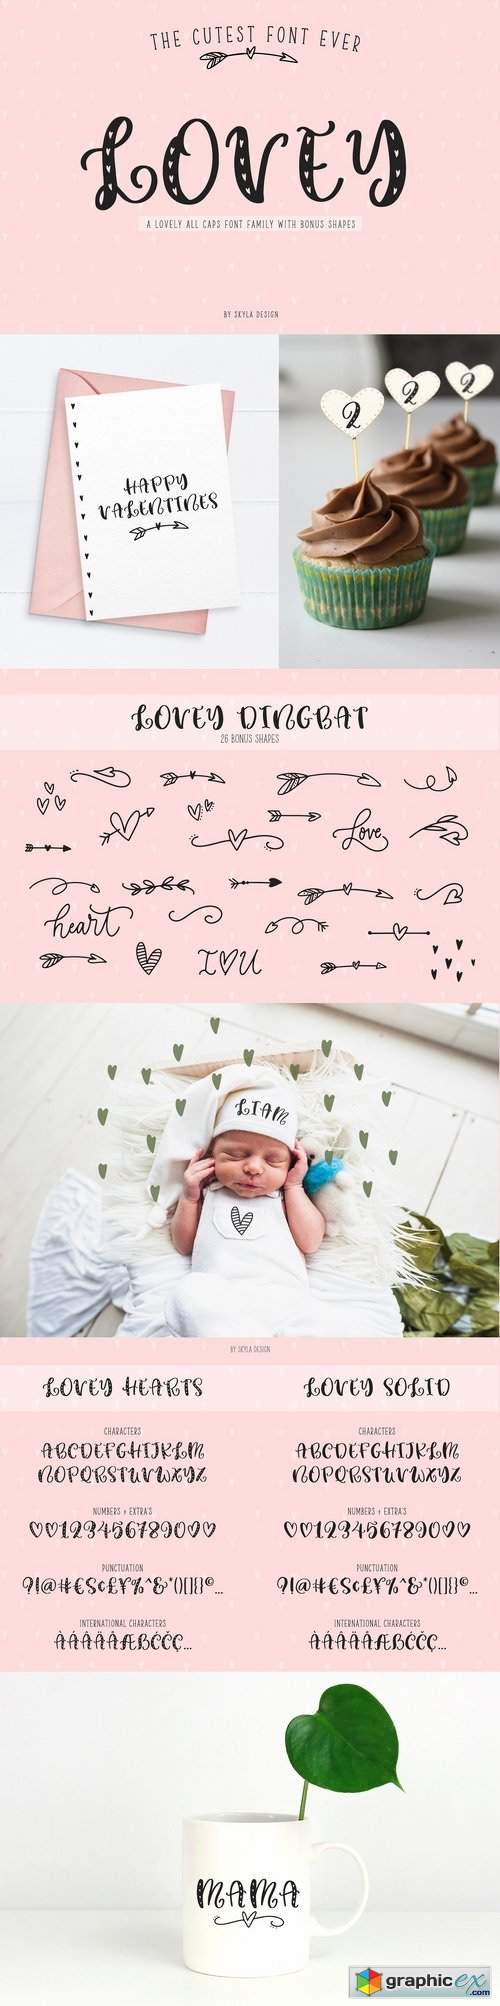 Lovey cute heart font family